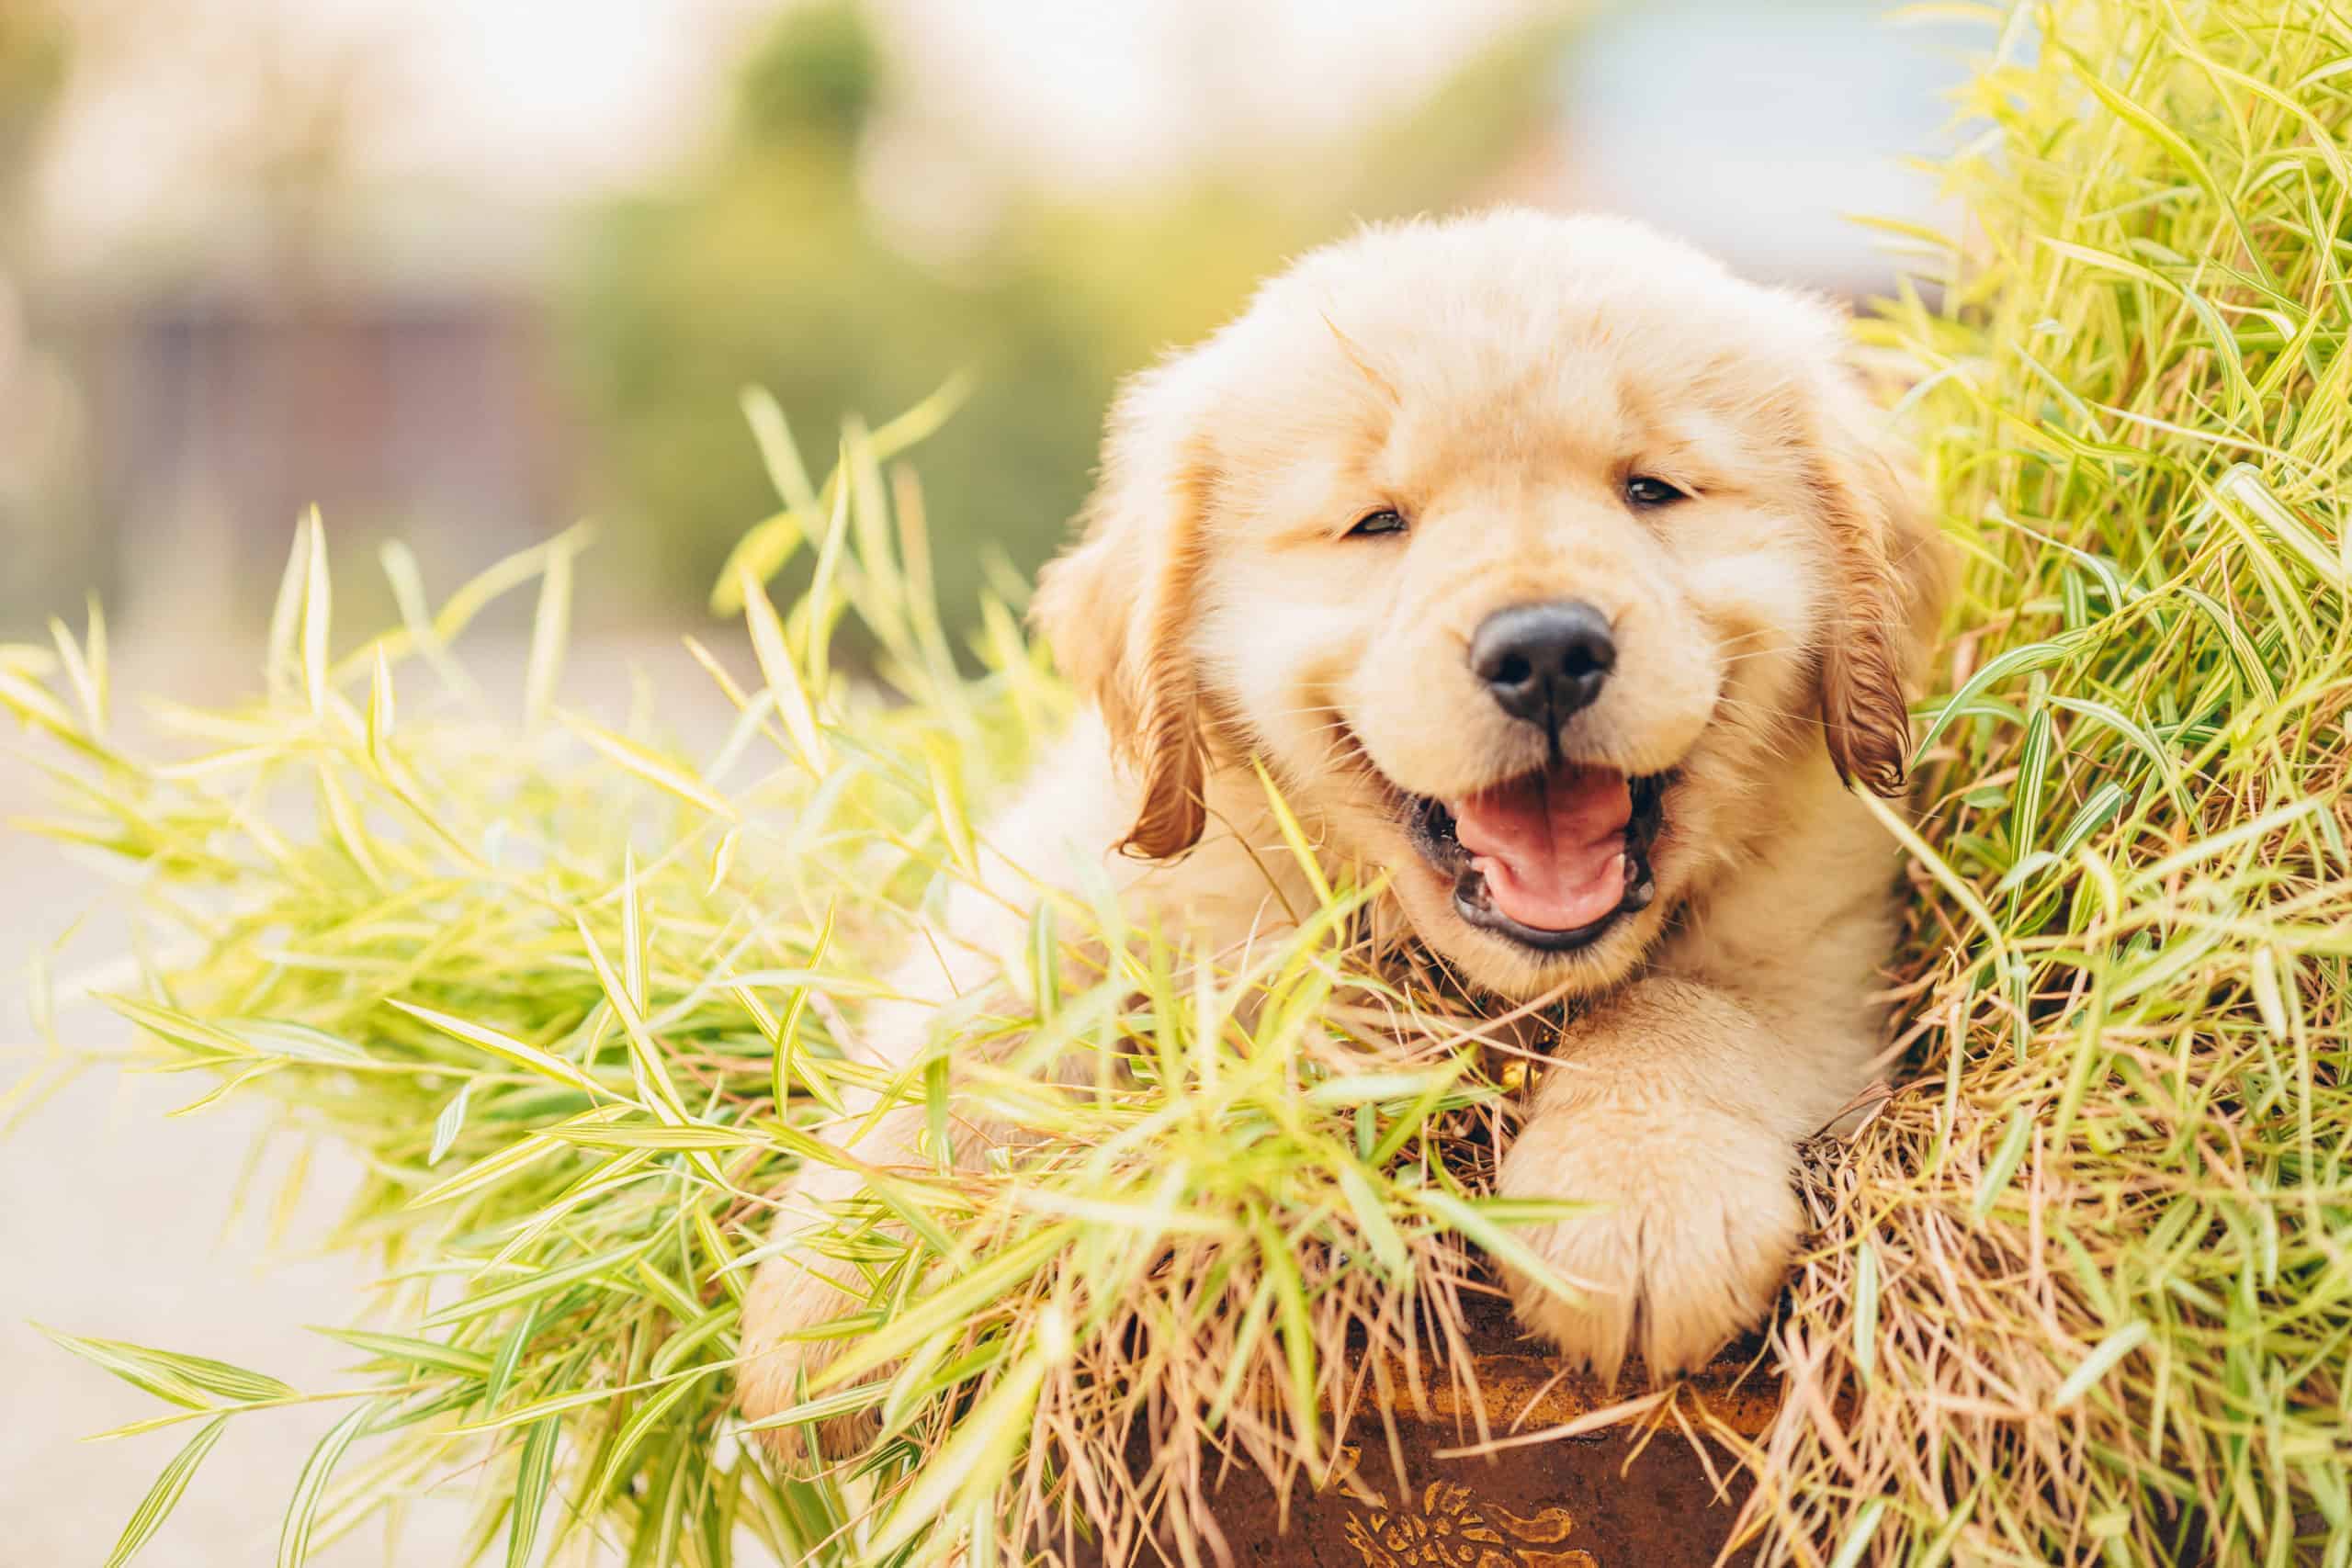 Little cute puppy (Golden Retriever) eating small bamboo plants or Thyrsostachys siamensis Gamble in garden pot